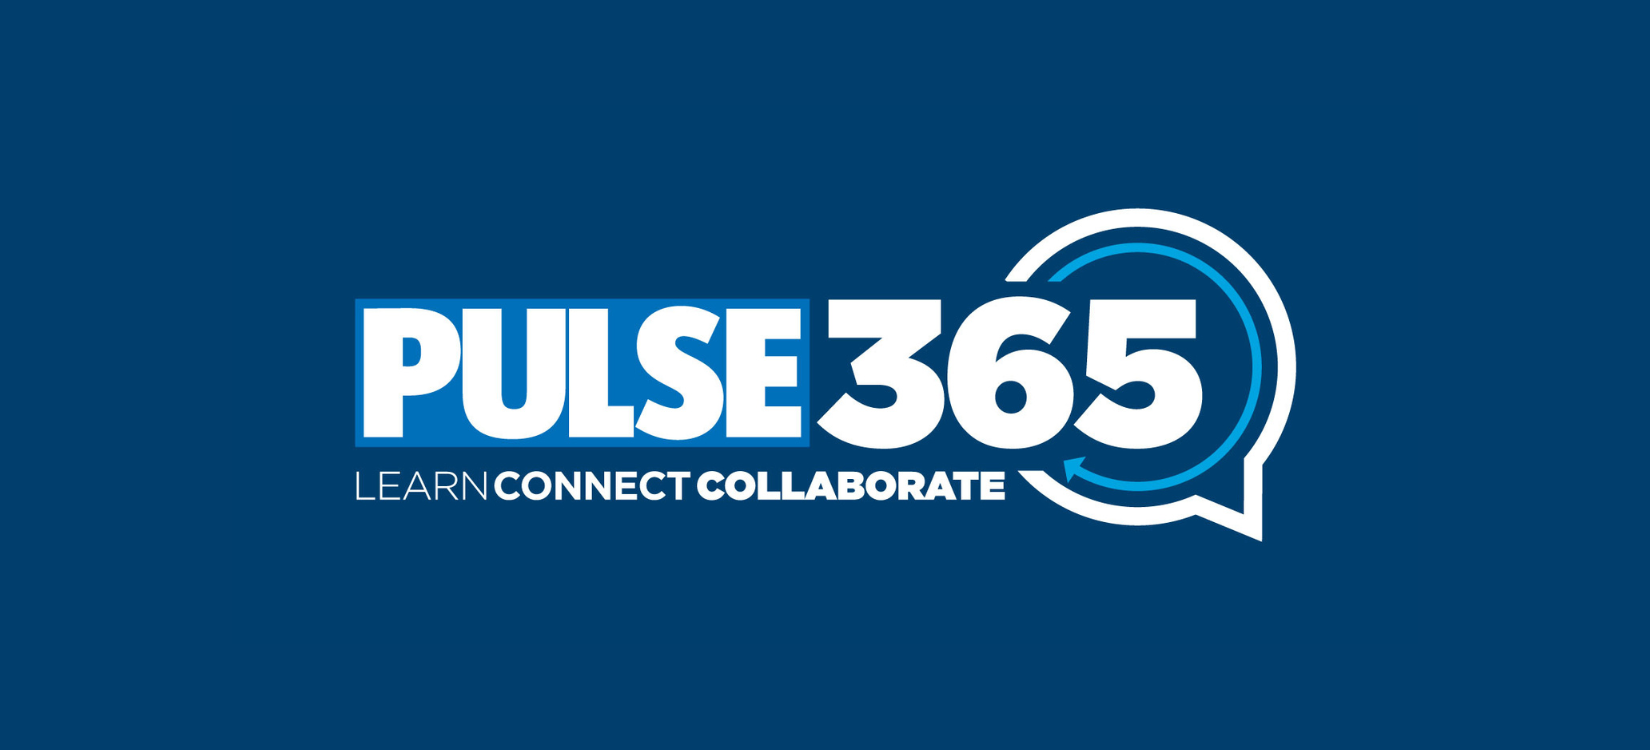 Pulse 365